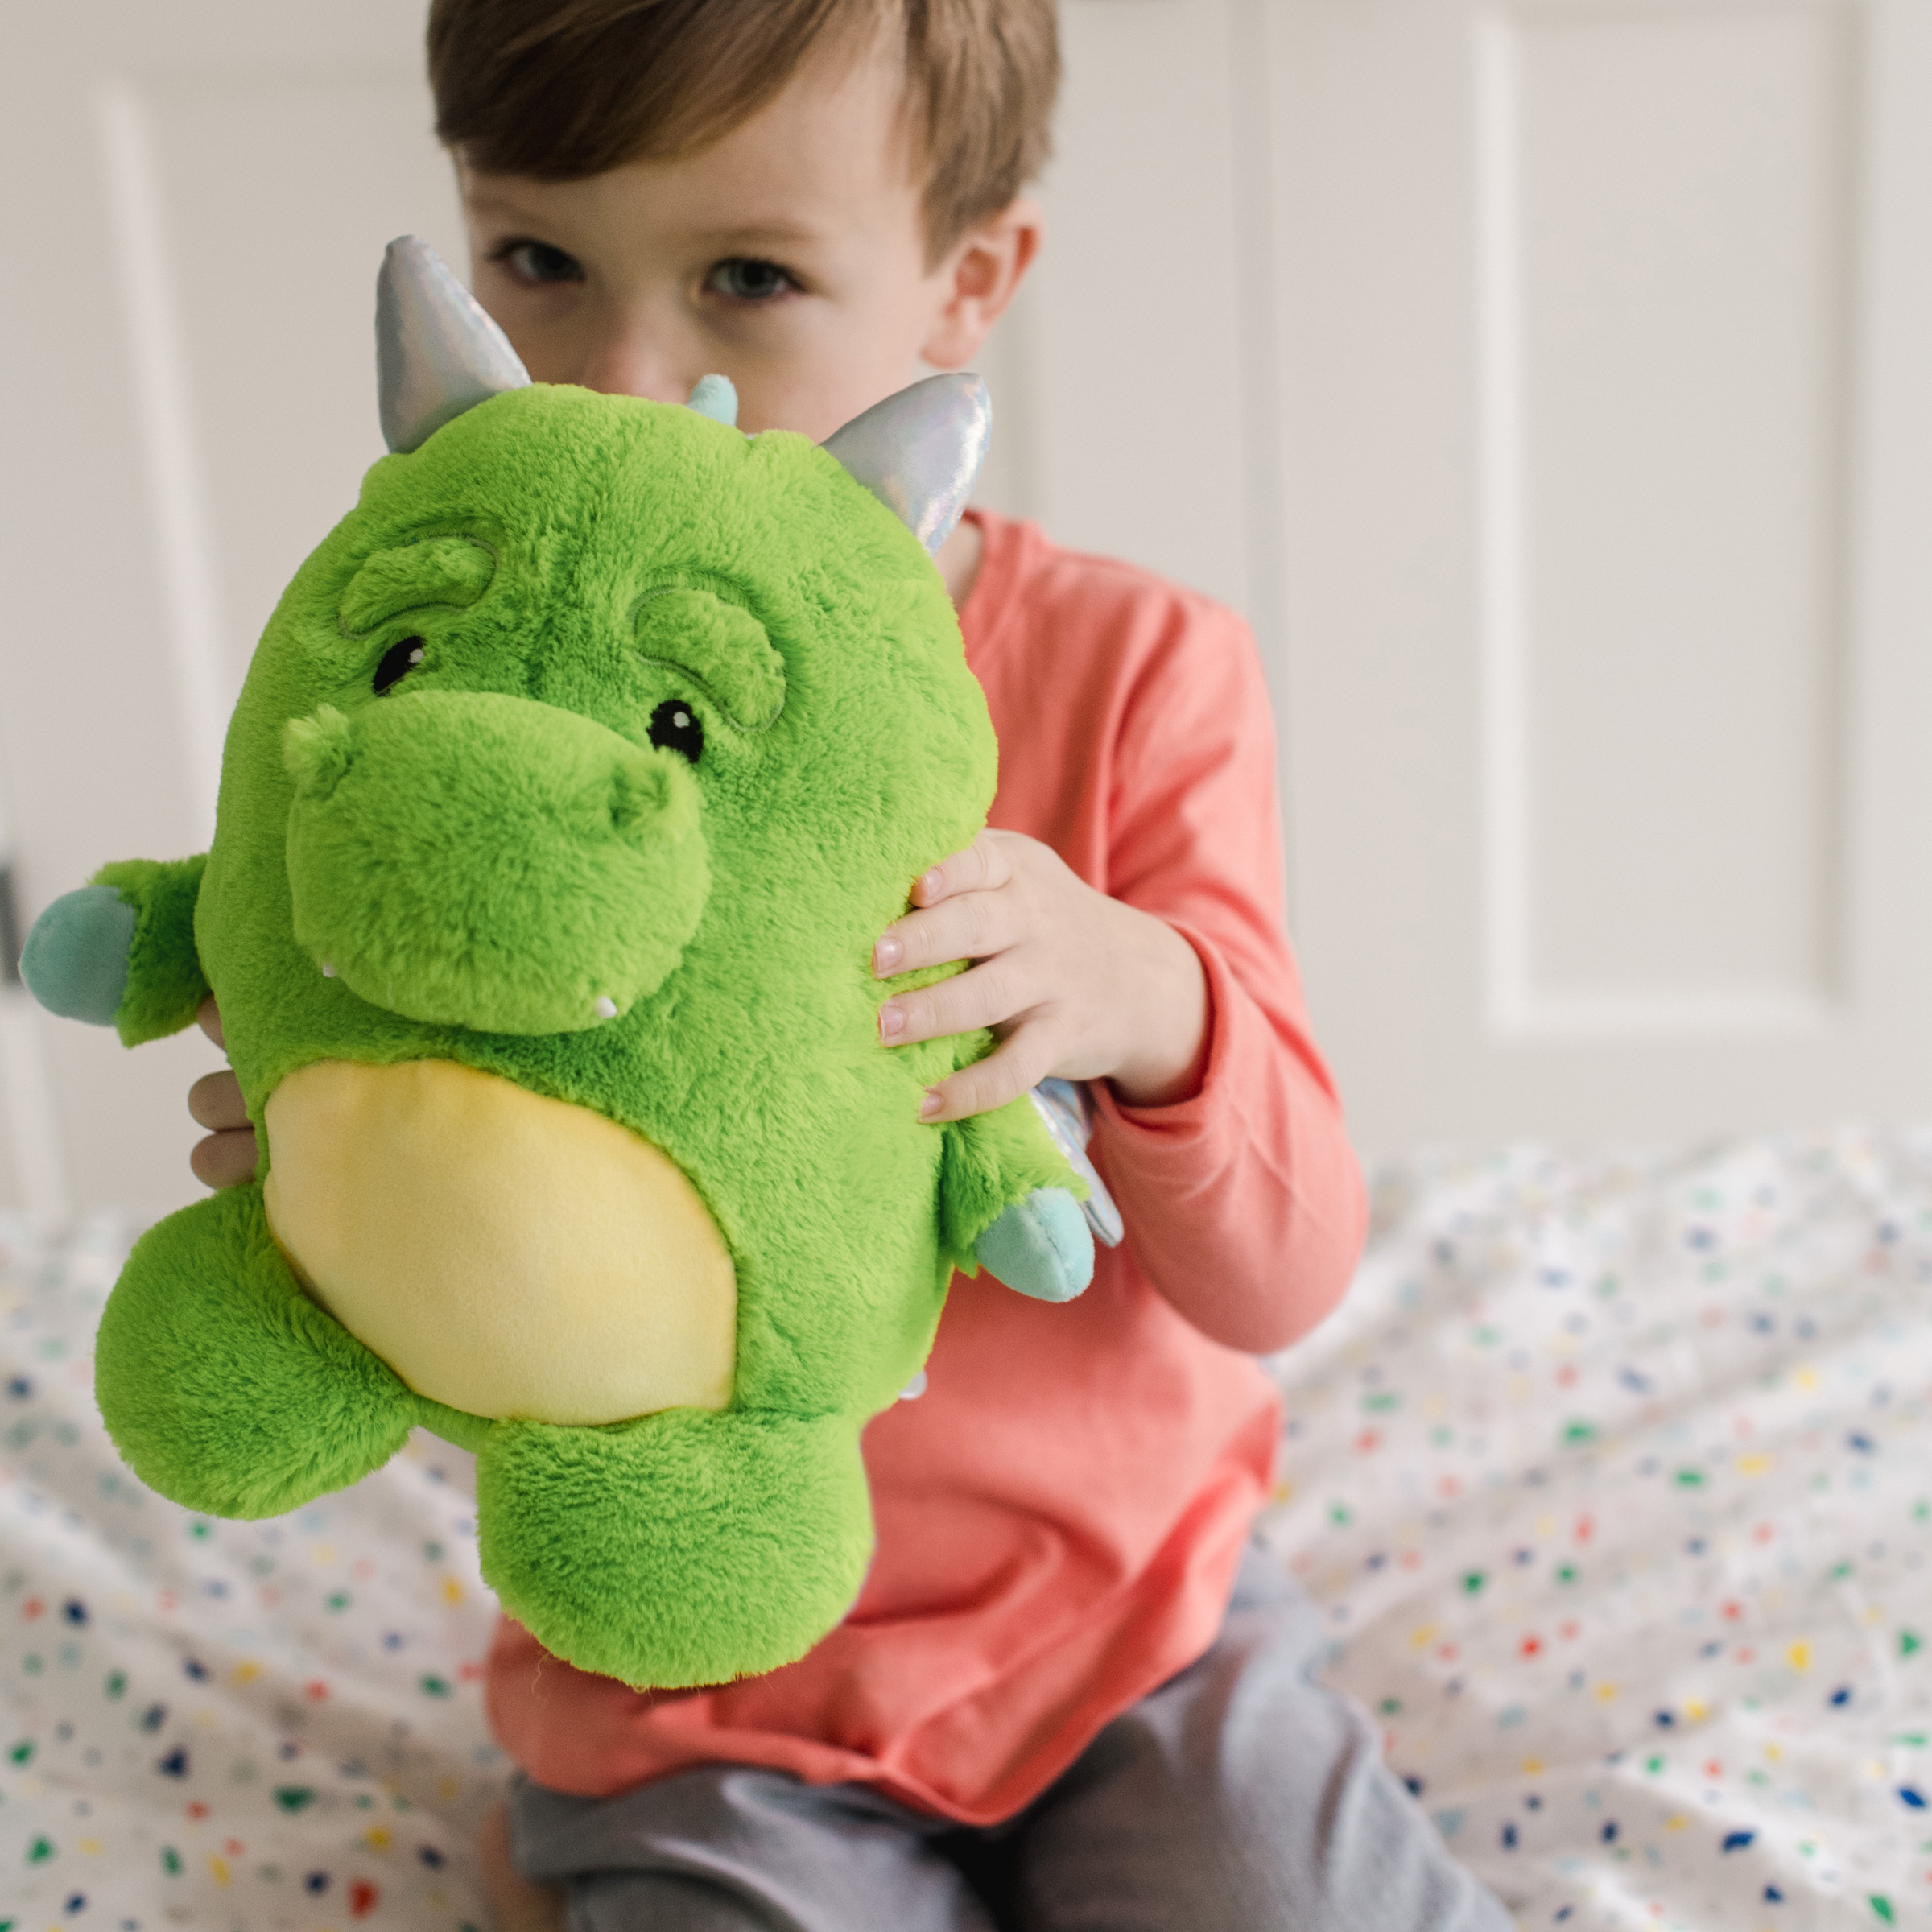 little boy holding a stuffed dragon plush